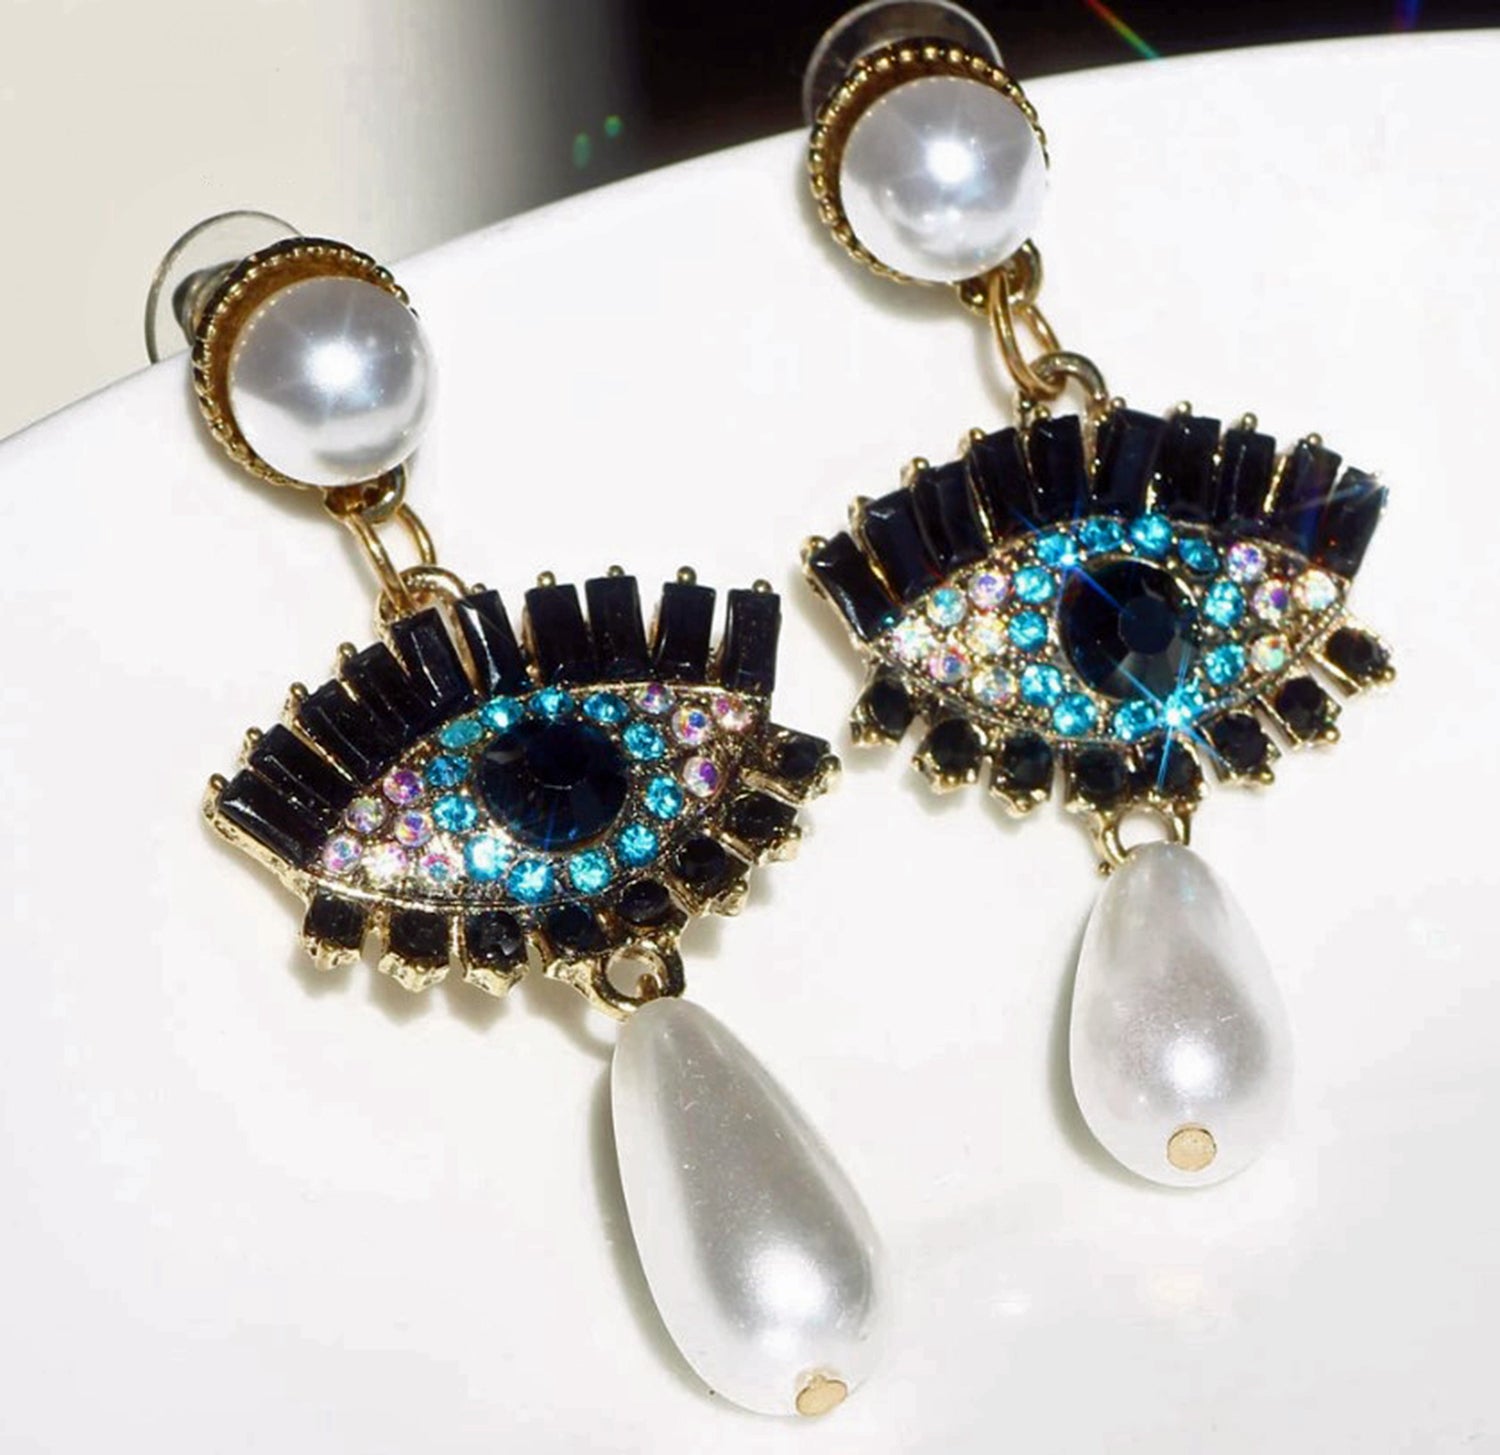 Fashion pearl pierced earring with rhinestone in Eye Shape - Providence silver gold jewelry usa